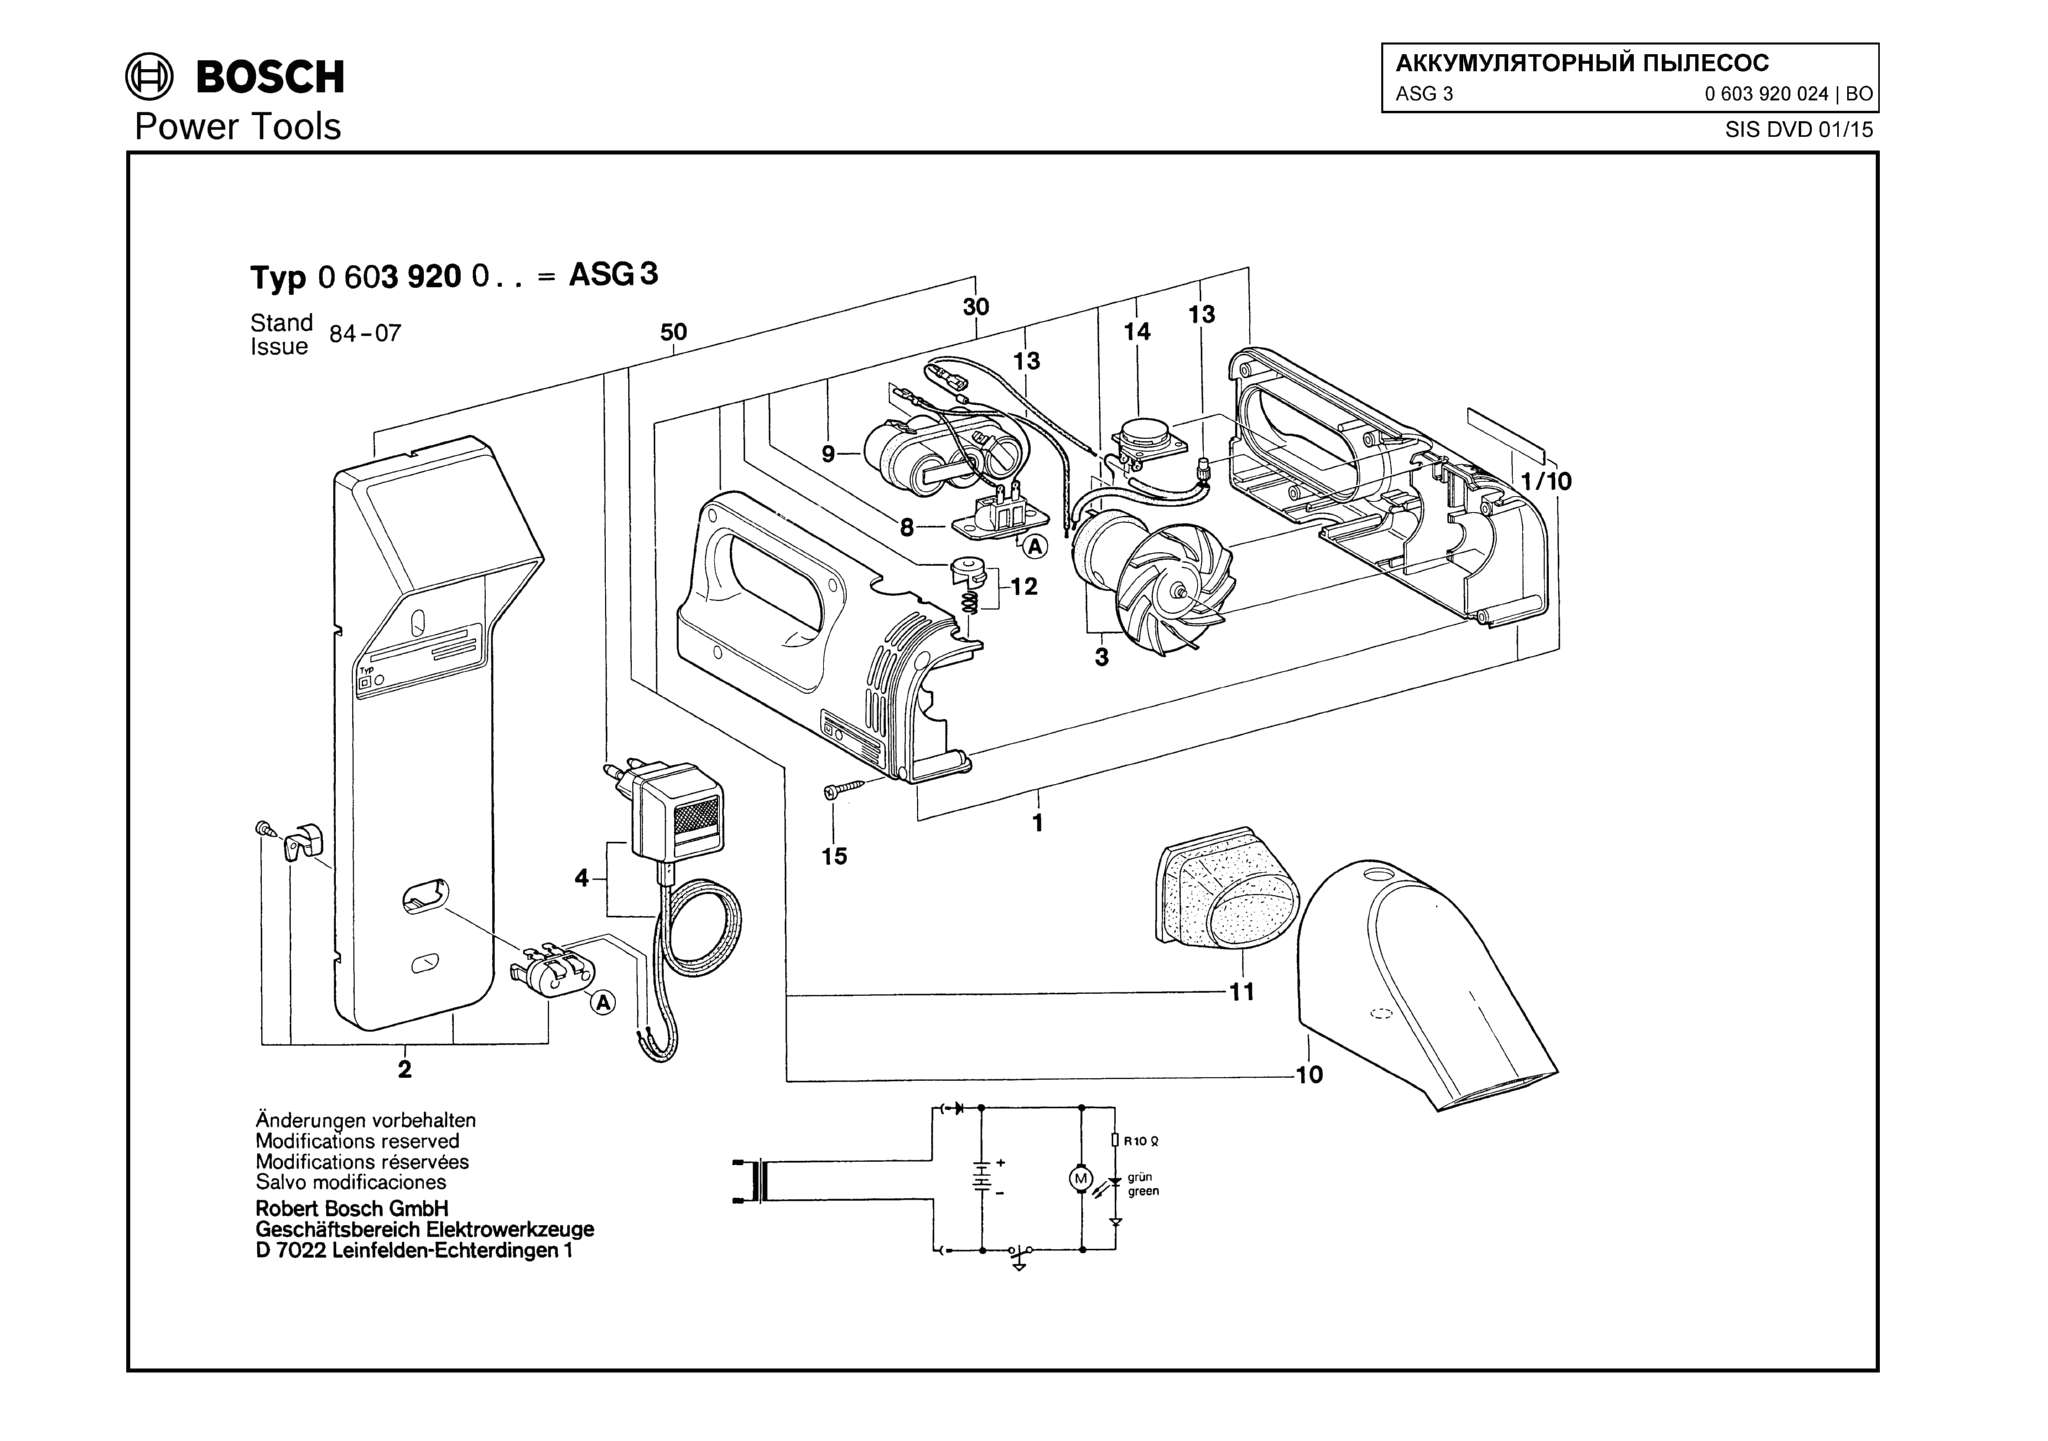 Запчасти, схема и деталировка Bosch ASG 3 (ТИП 0603920024)